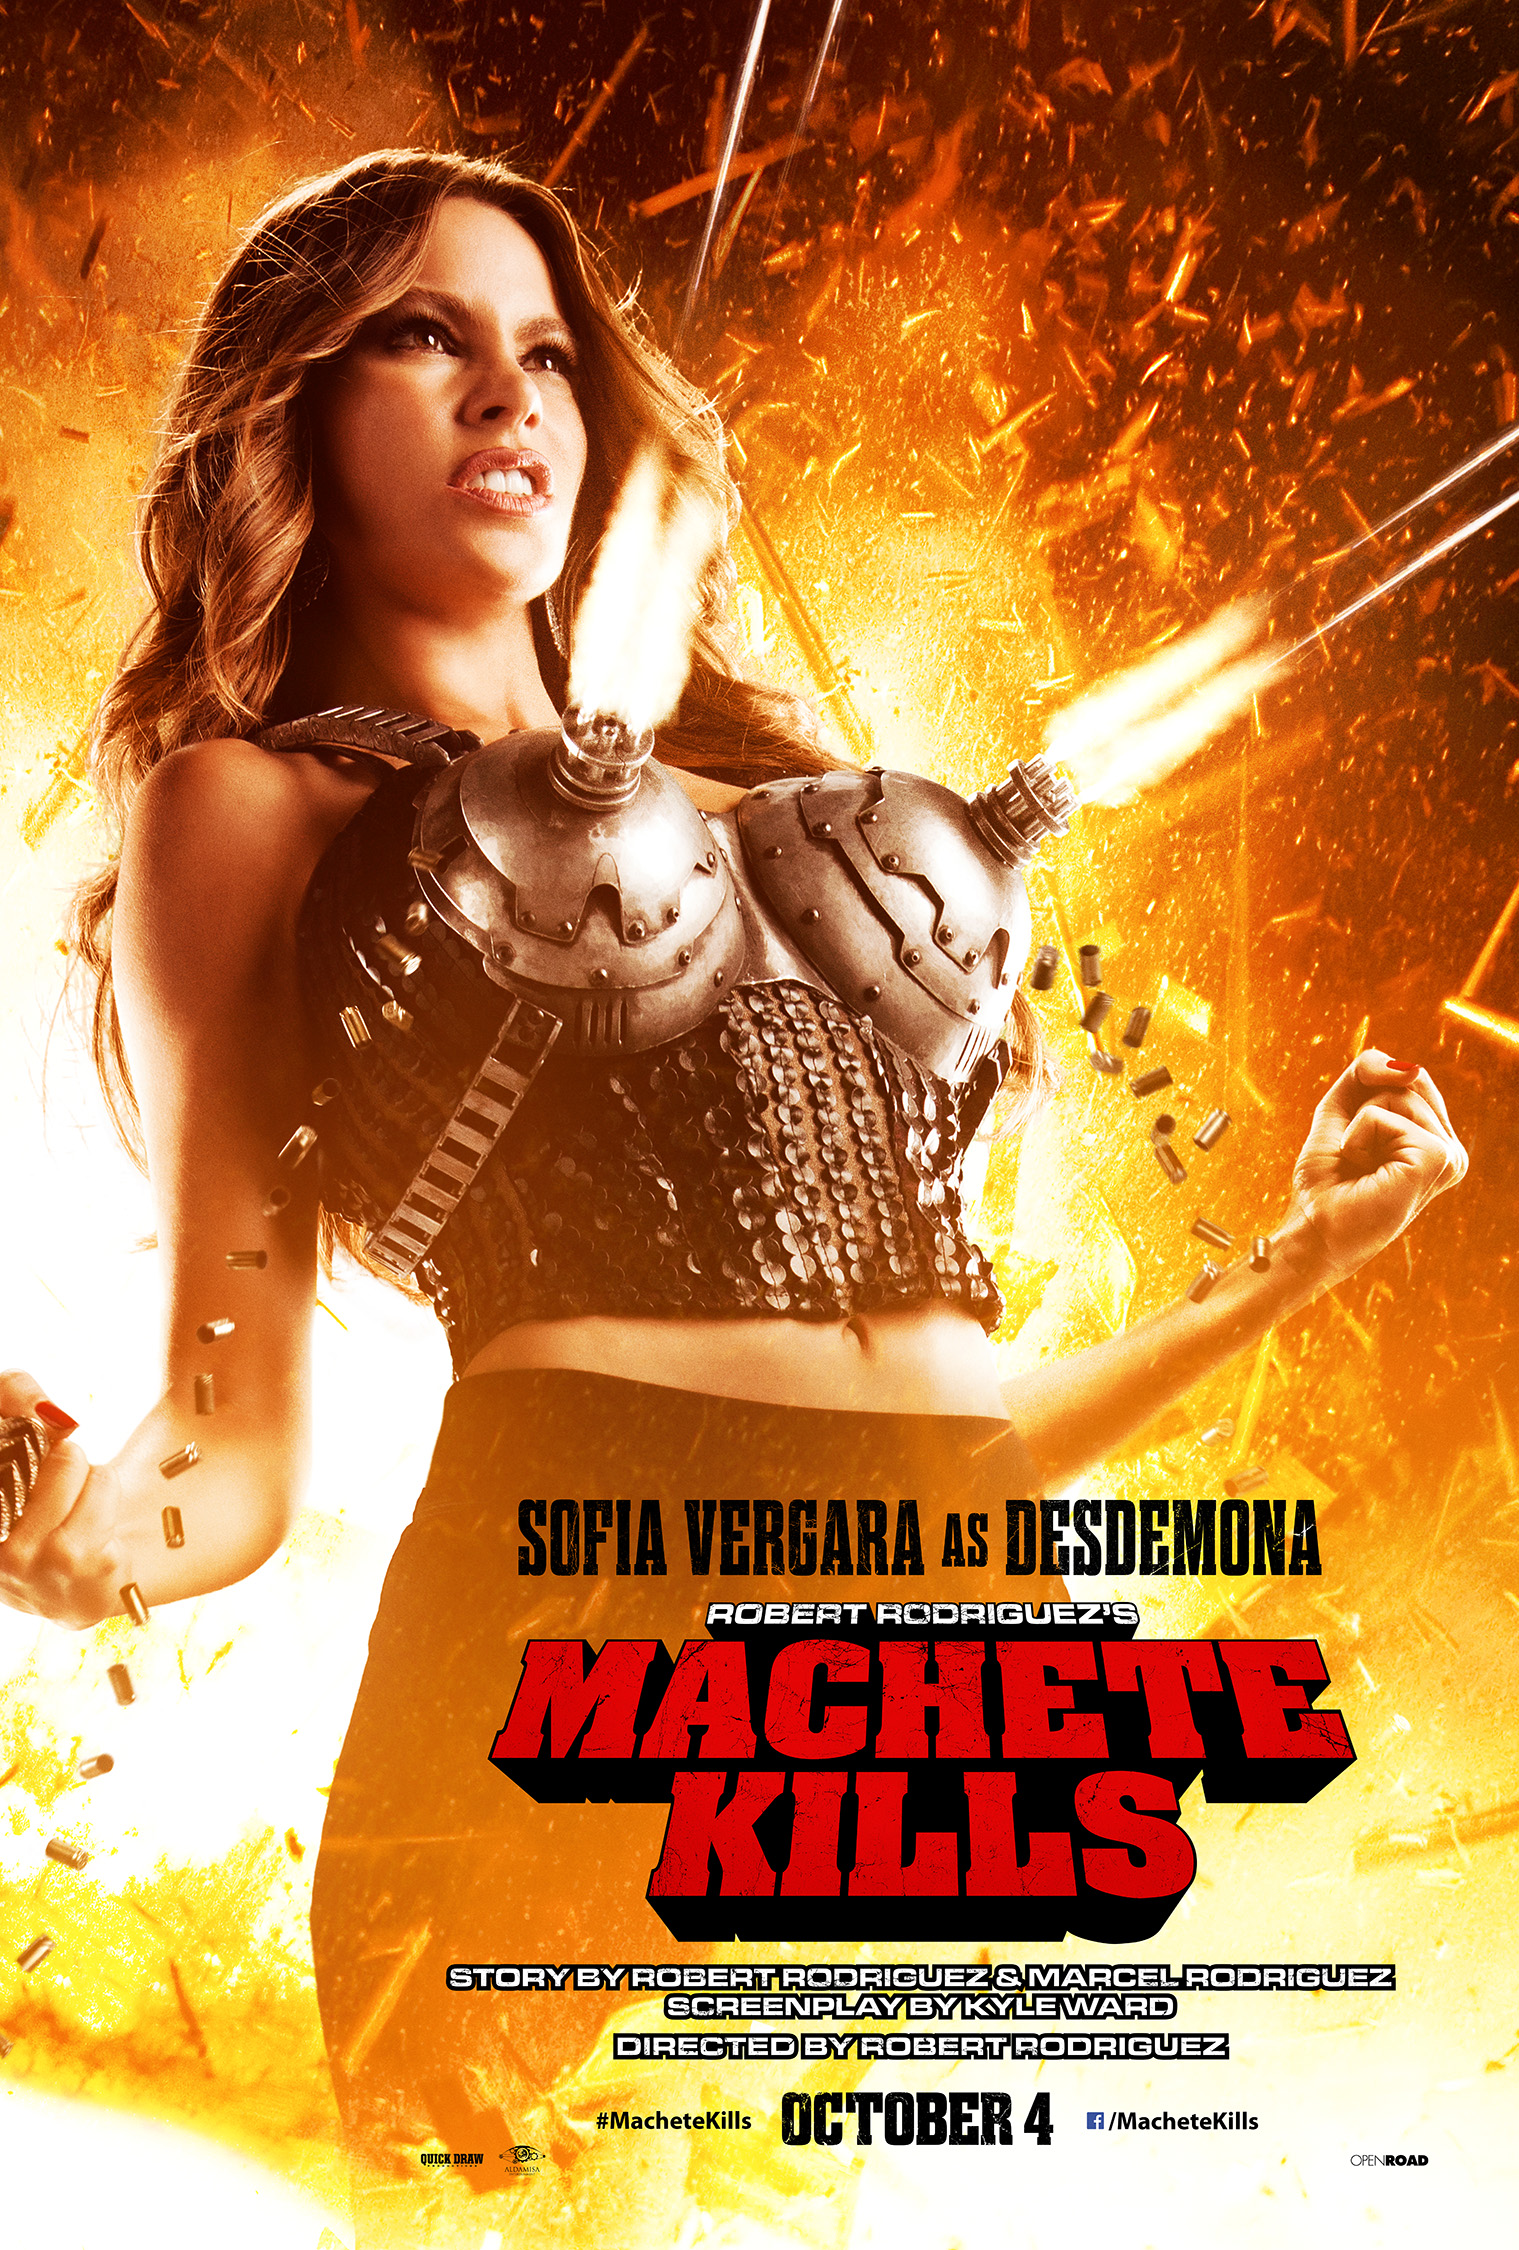 Machete Kills To Premiere At Fantastic Fest In Austin, Texas On September 19, 20131519 x 2250